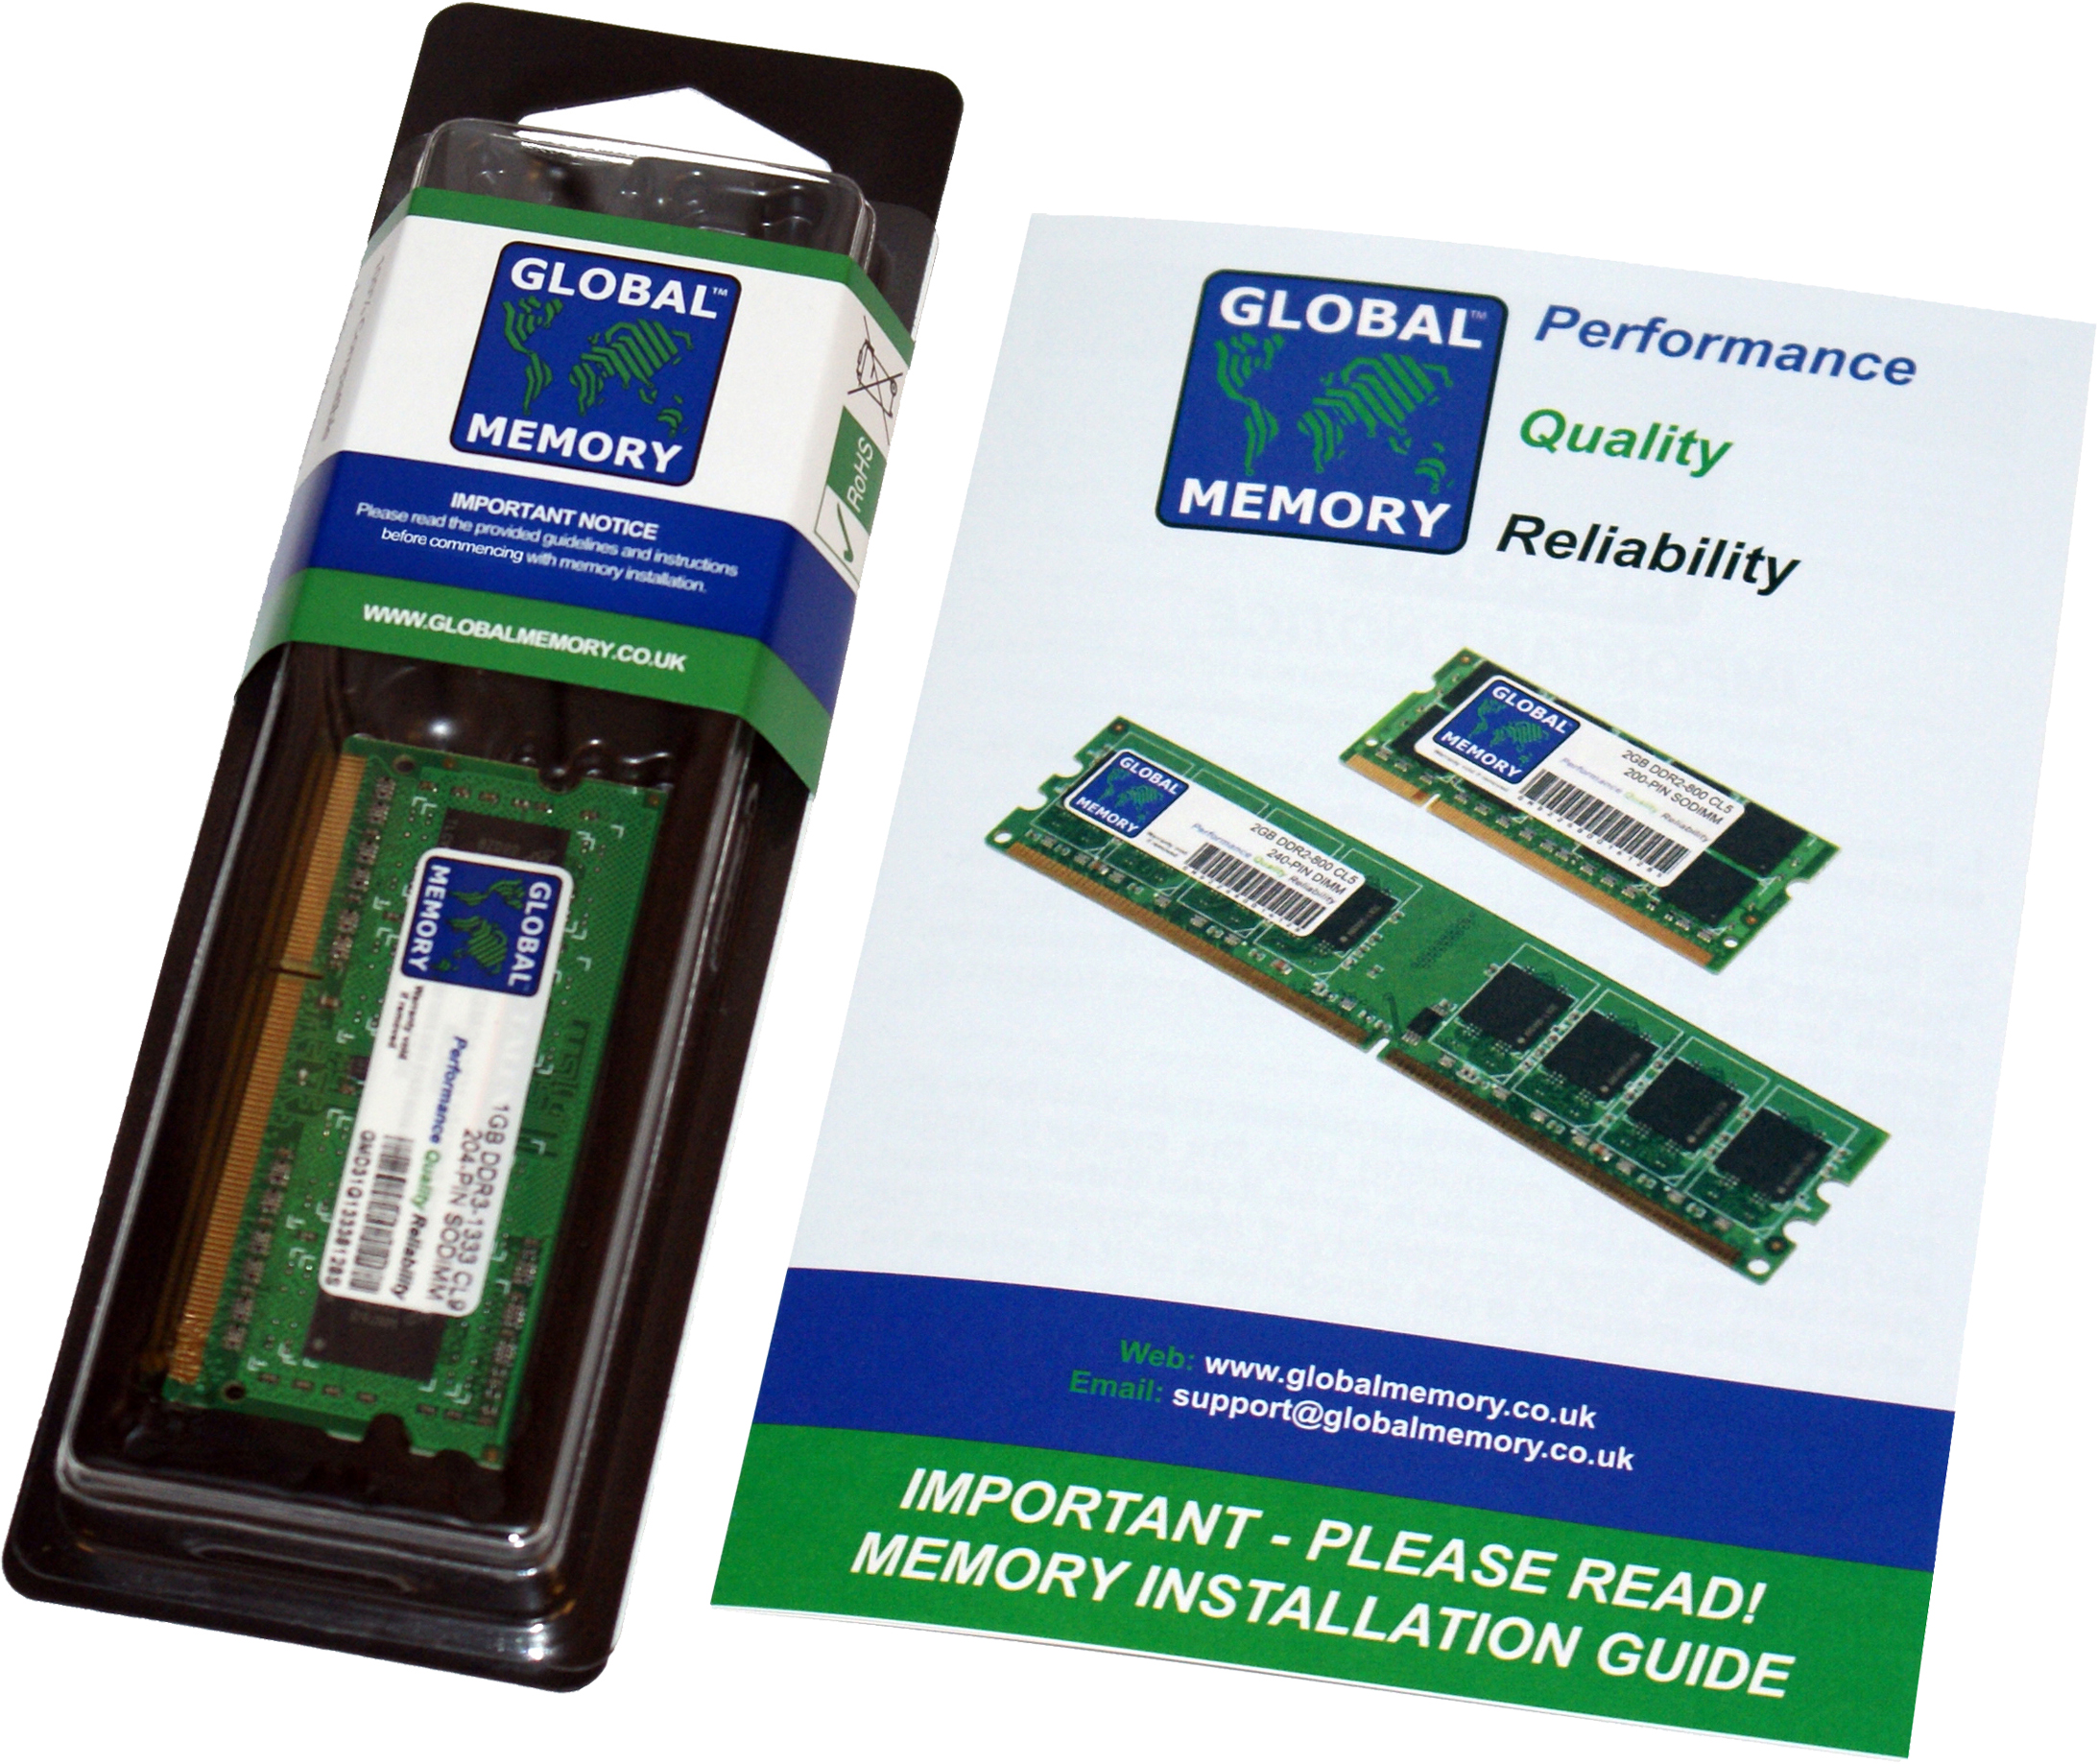 4GB DDR4 2666MHz PC4-21300 260-PIN SODIMM MEMORY RAM FOR FUJITSU LAPTOPS/NOTEBOOKS